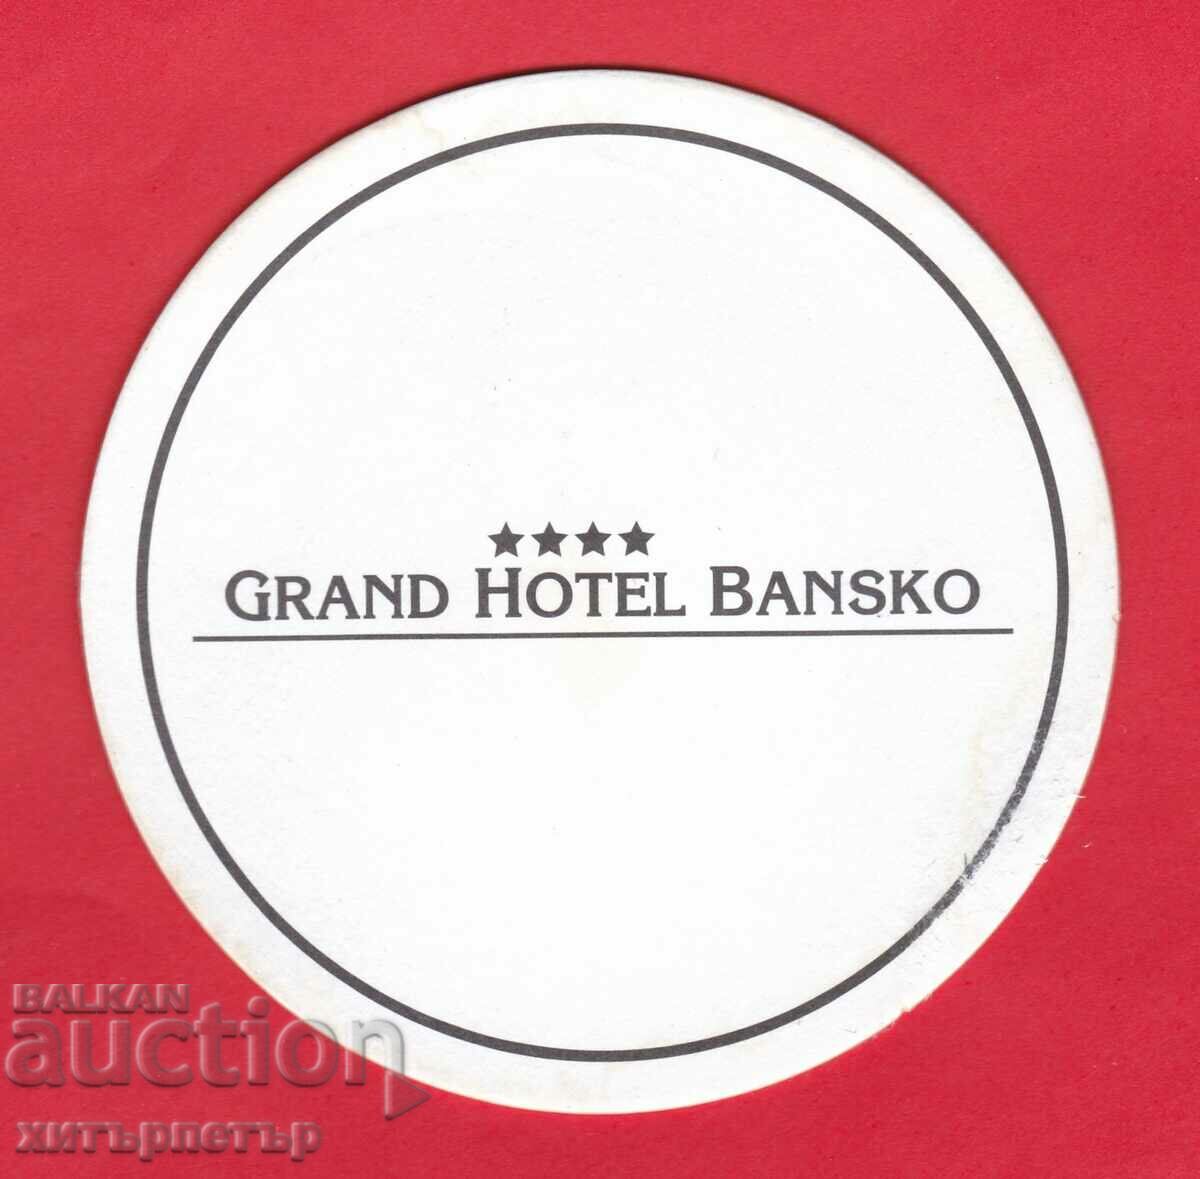 Grand Hotel Bansko cup coaster